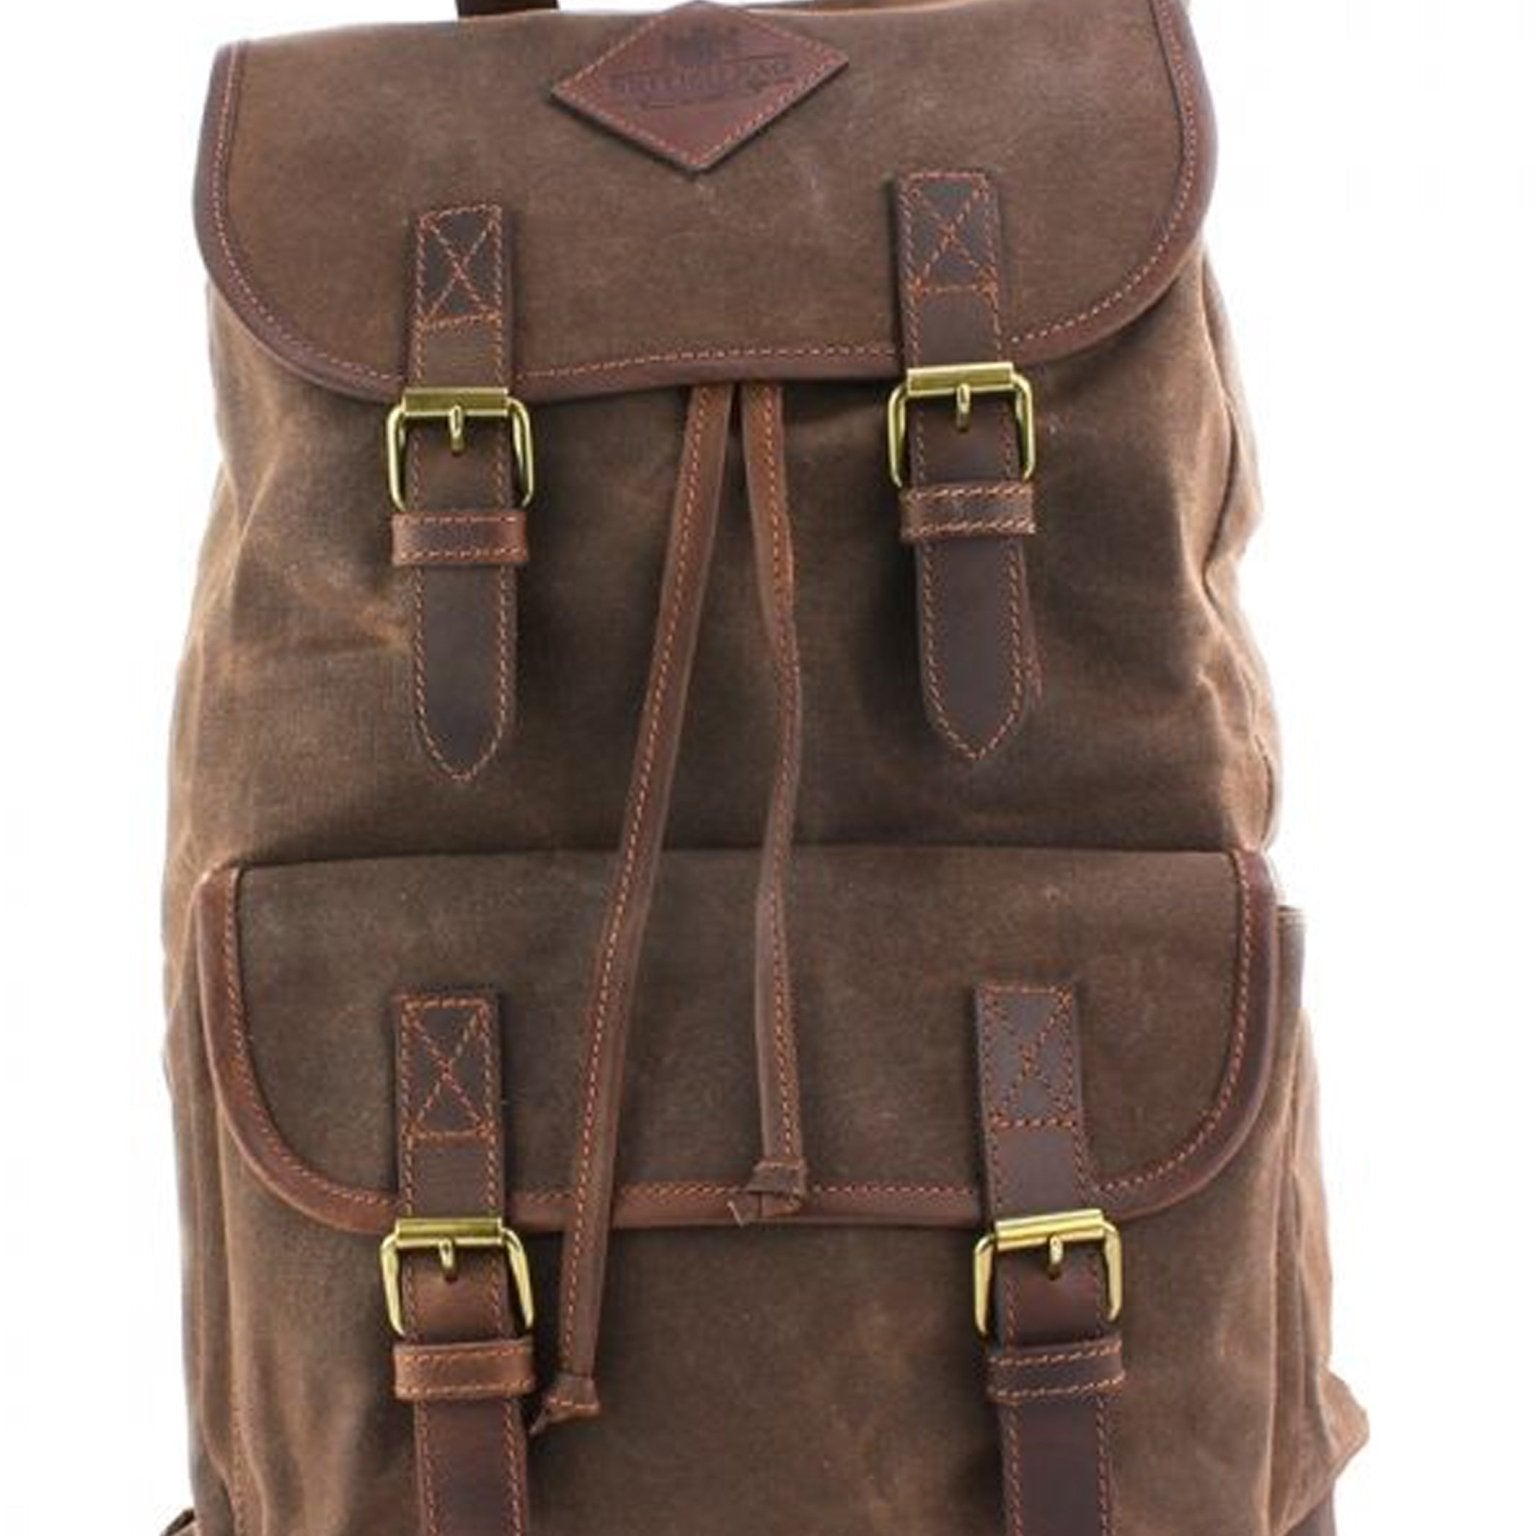 4elementsclothingThe British Bag CompanyThe British Bag Company - The Navigator Brown Wax Canvas RucksackBag709993